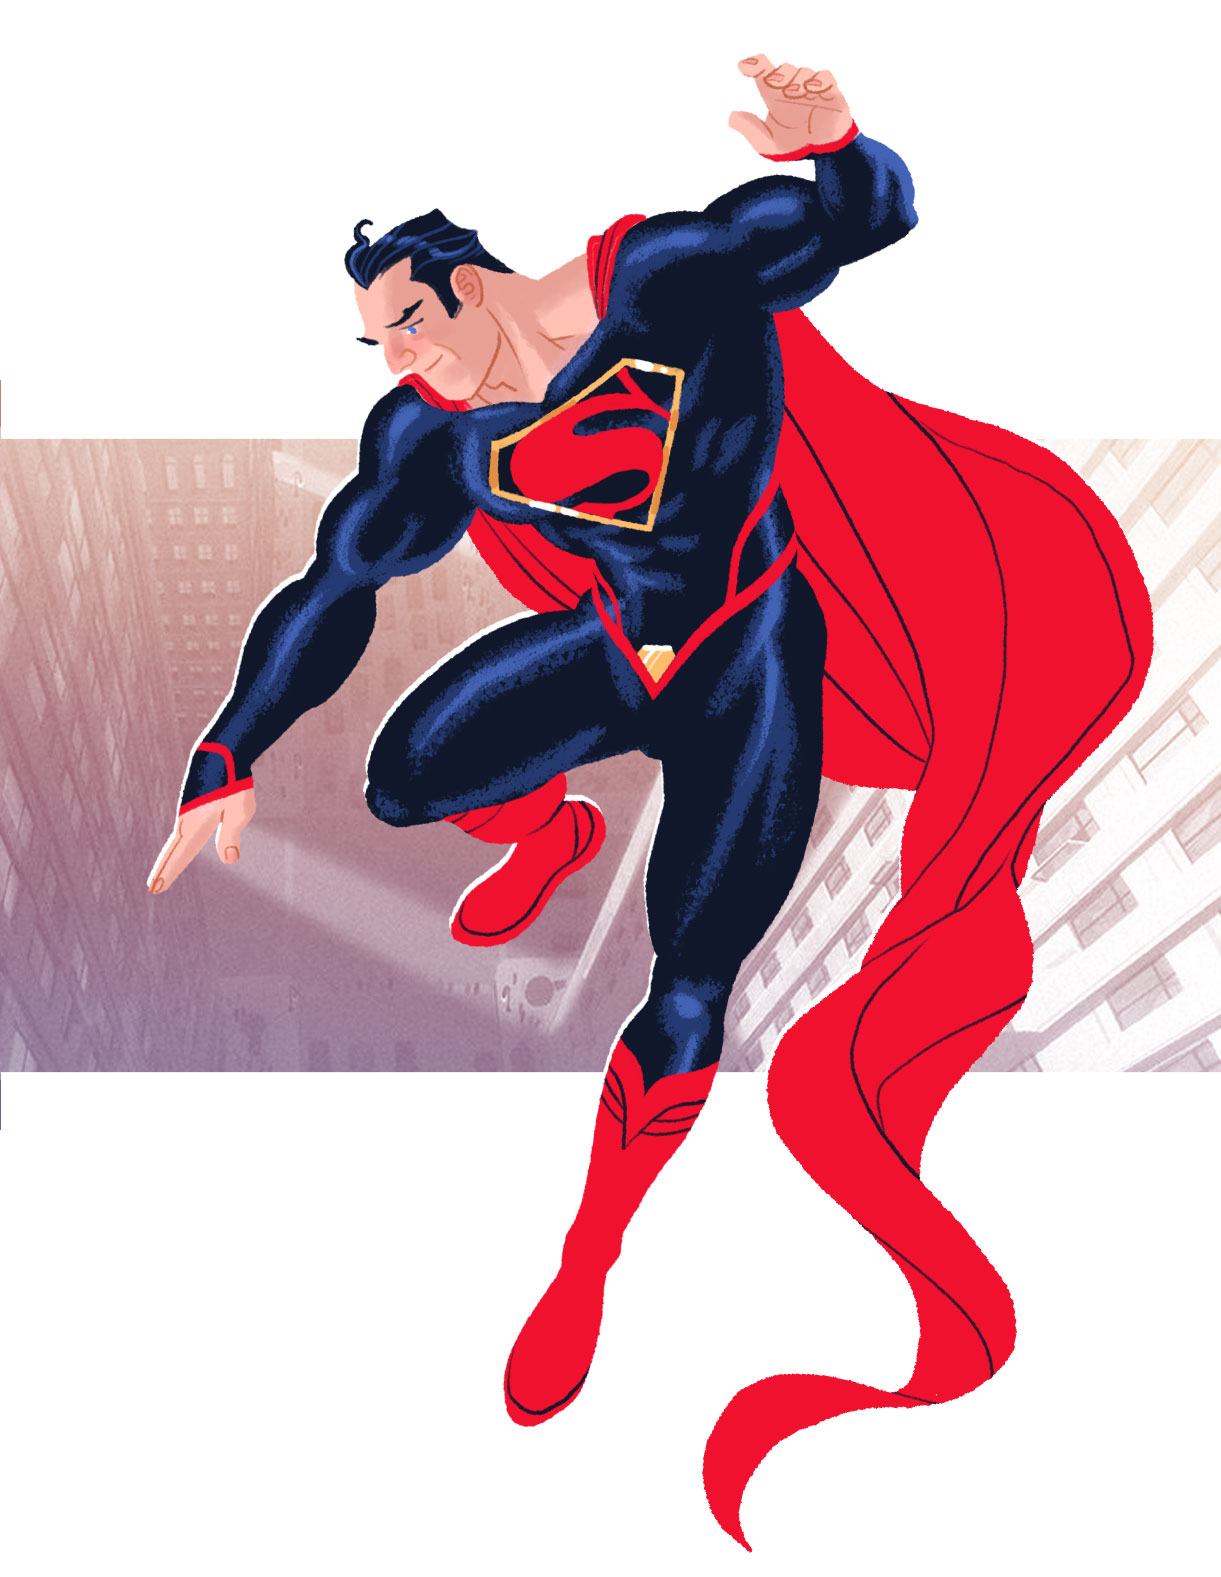 ThatComicBookArtist - Superman Flying Pose 4.